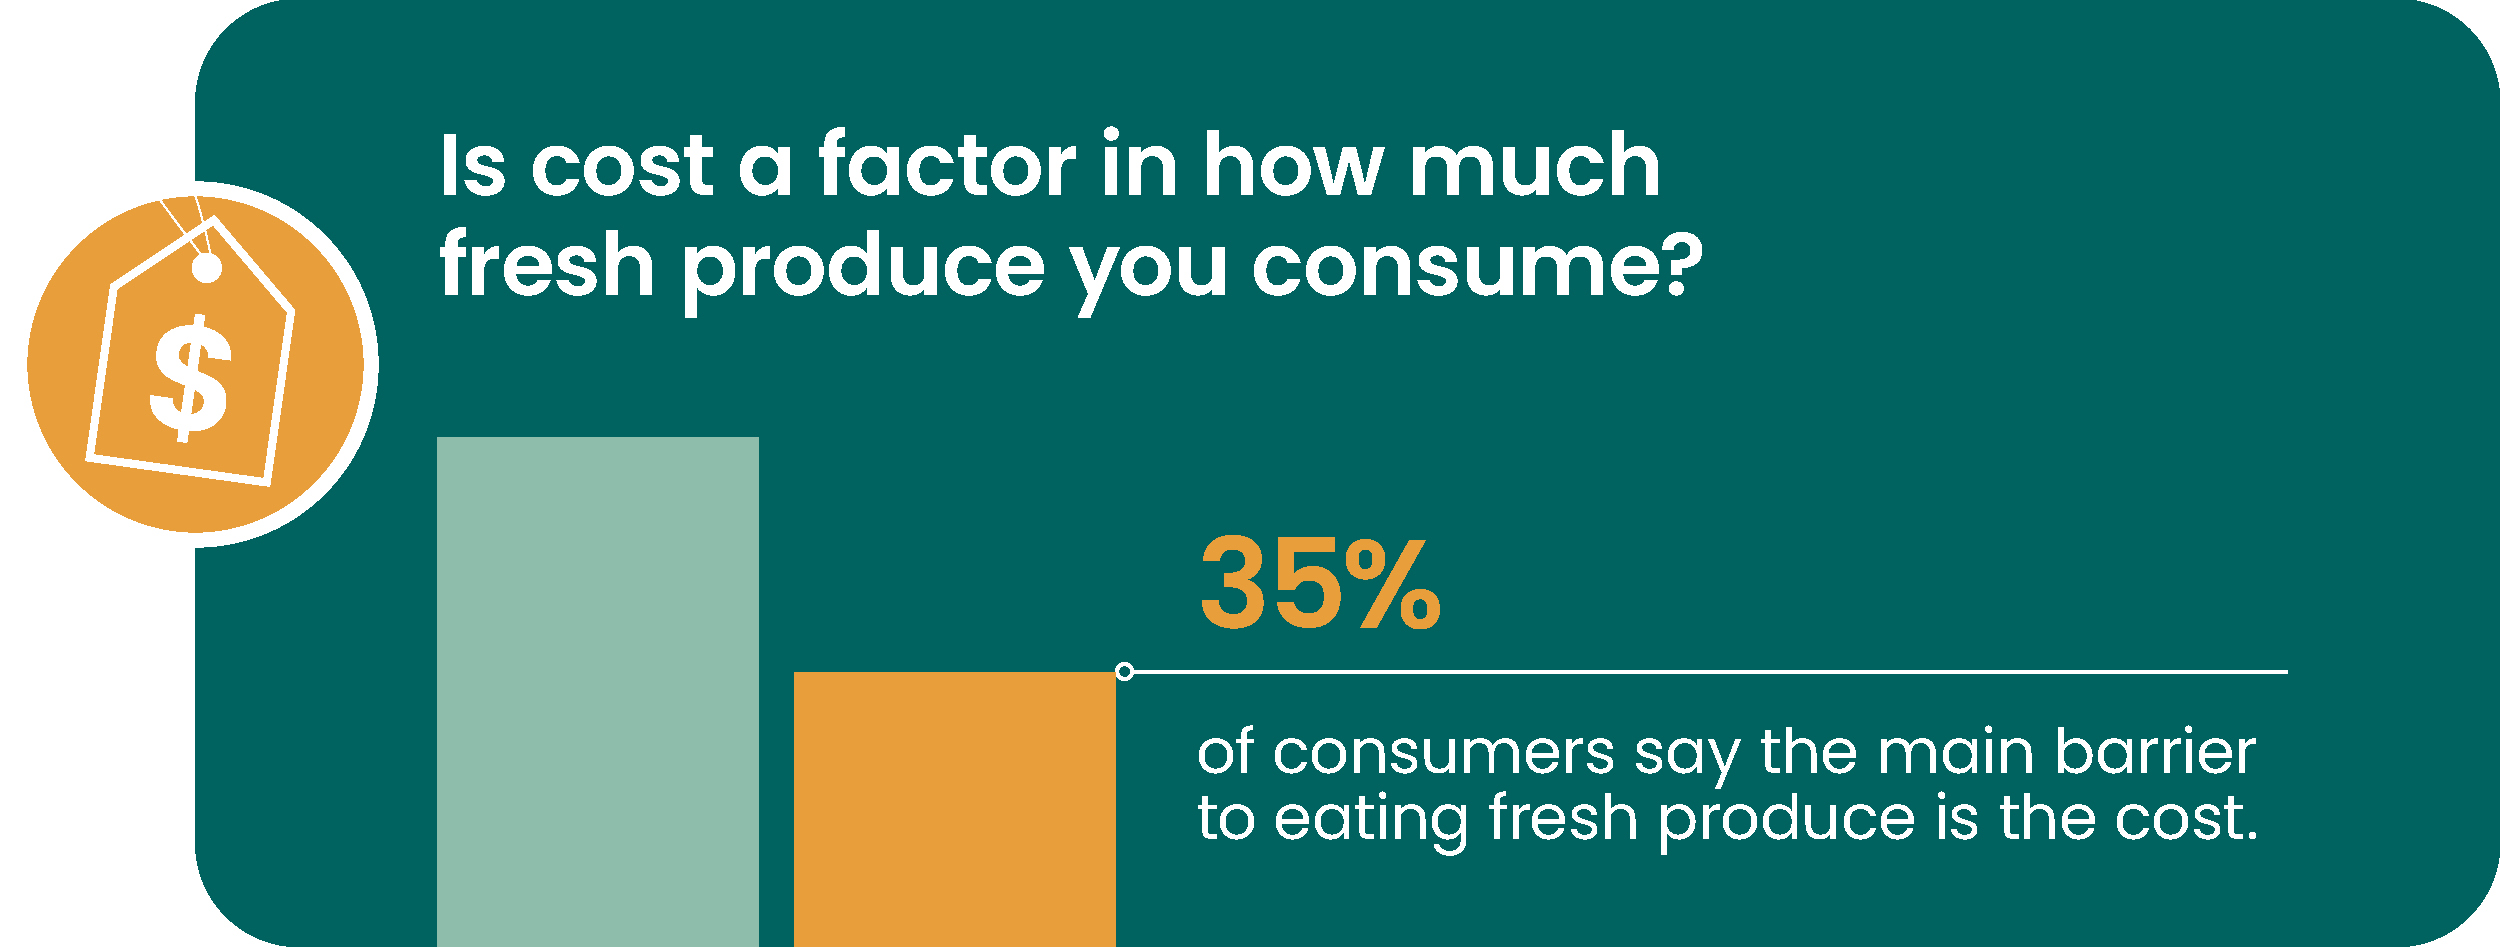 fresh produce cost consumer sentiment graphic